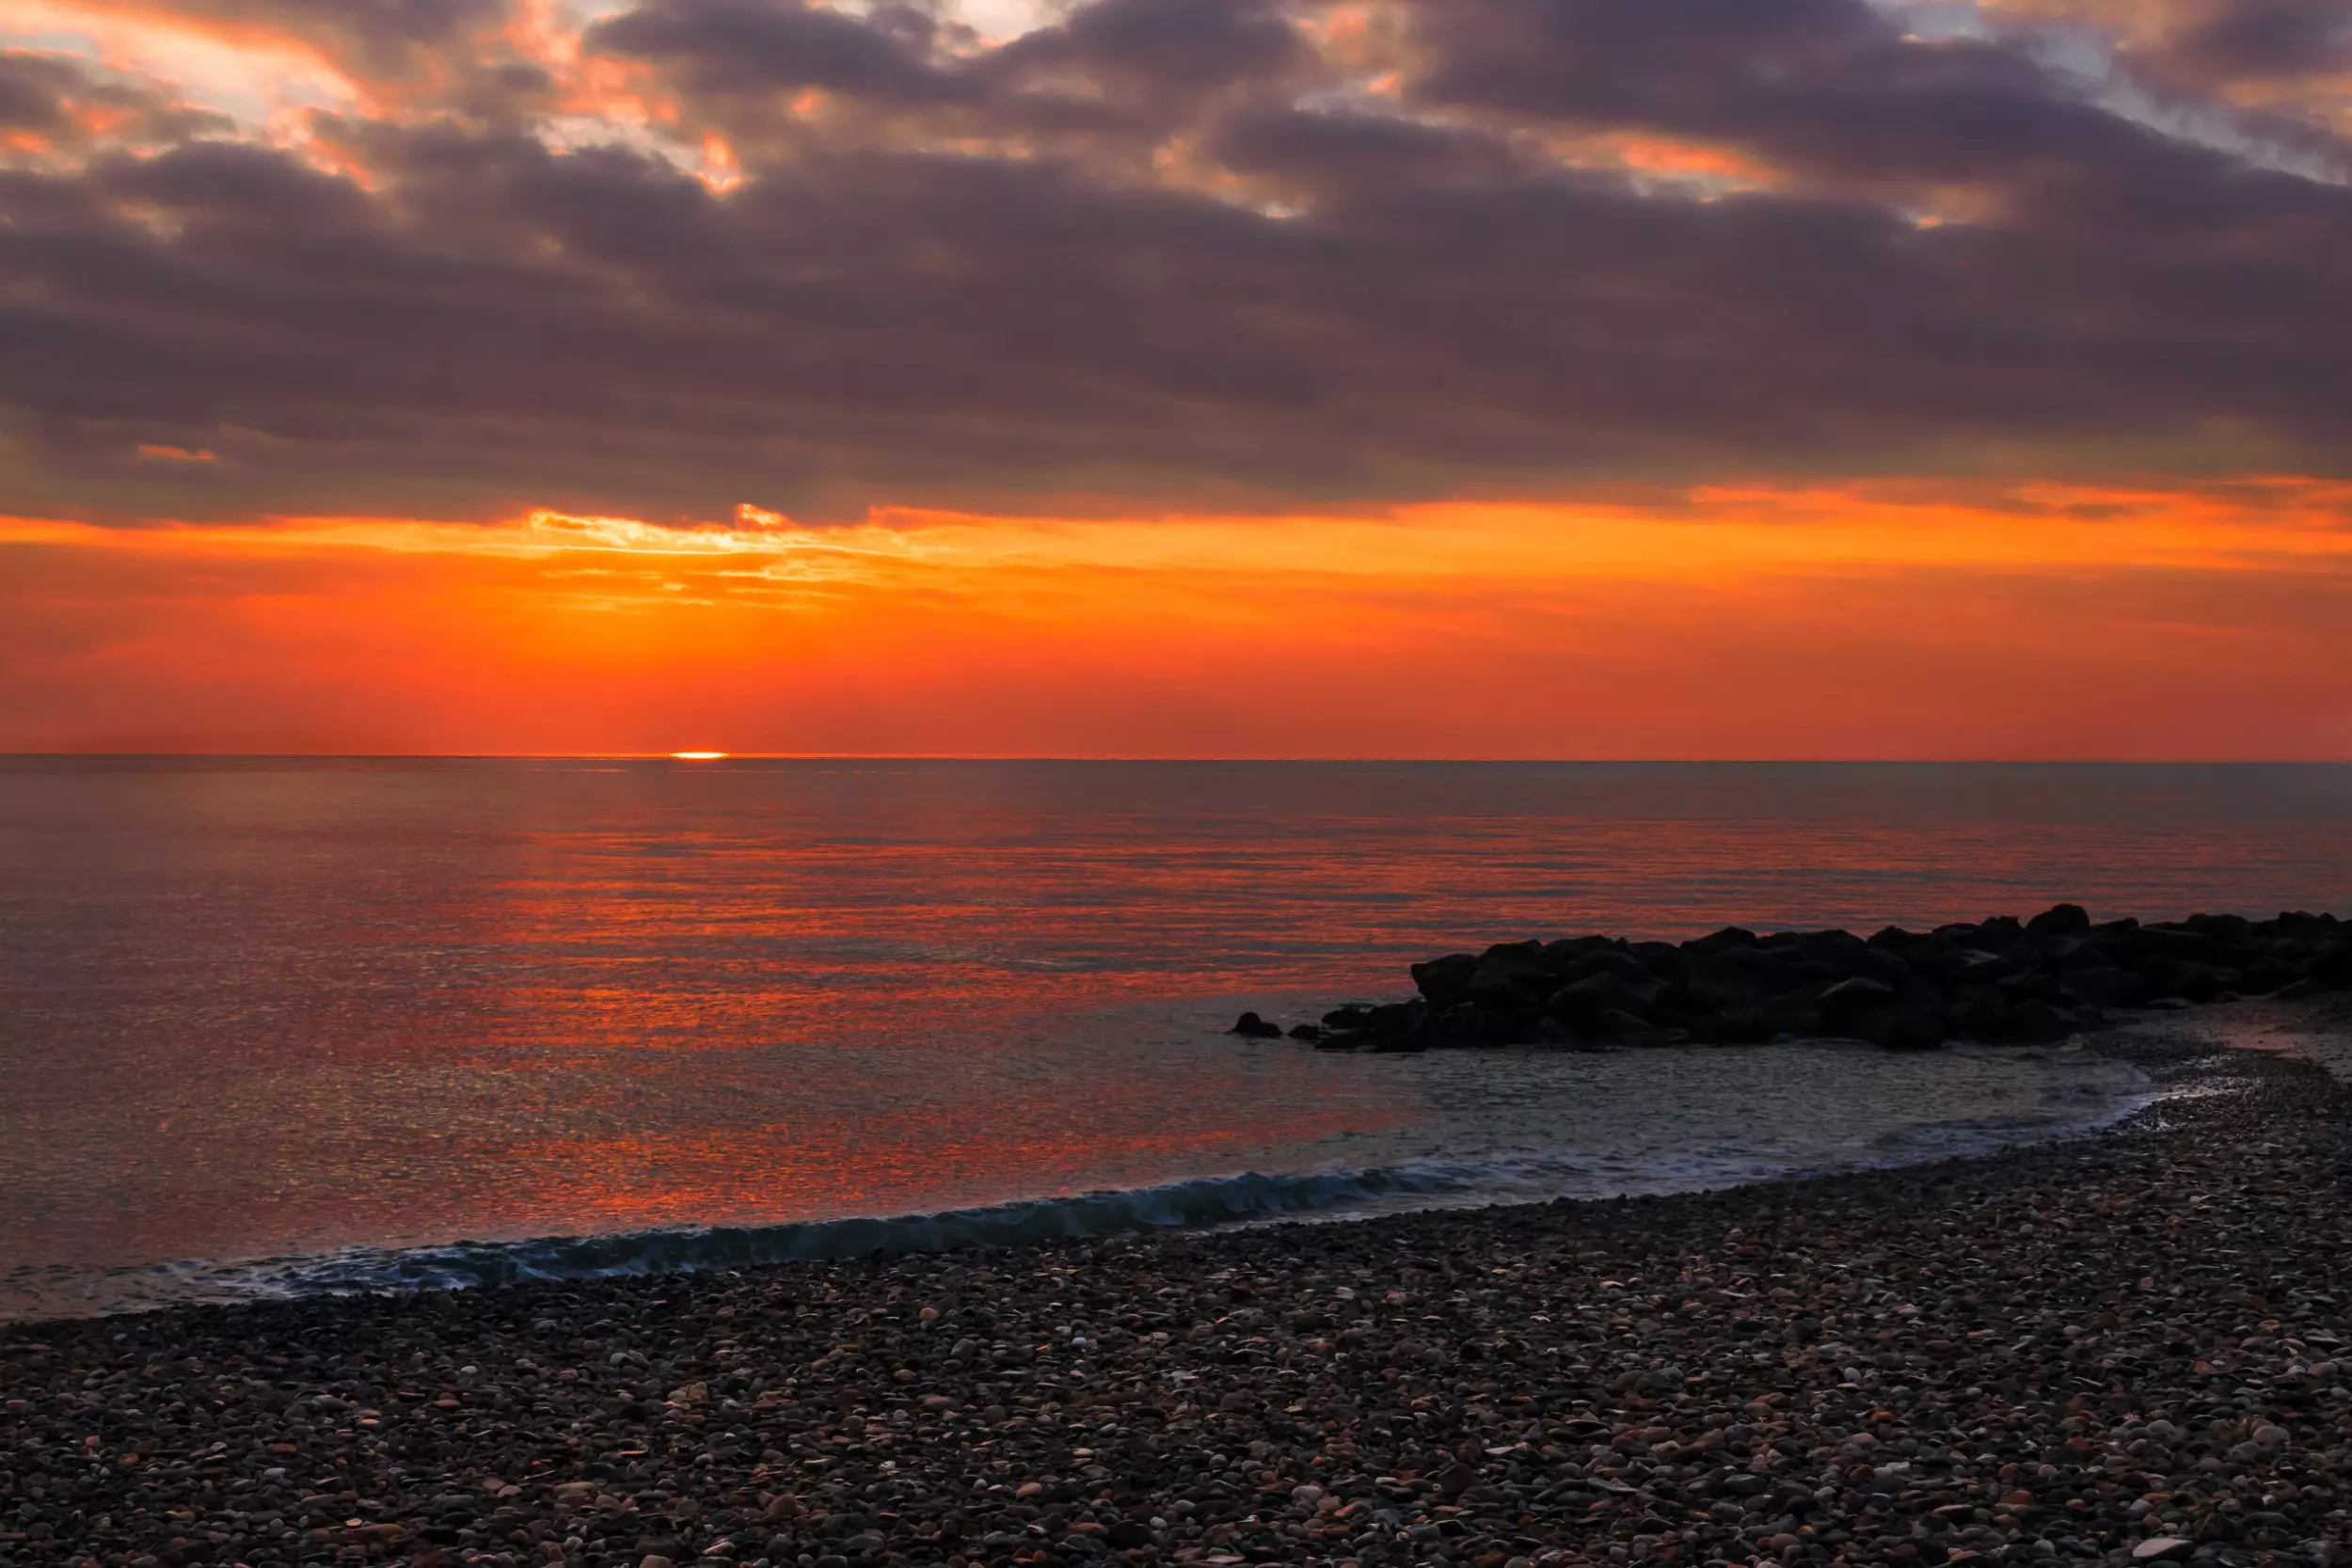 The sun rising over the Irish Sea at Bray